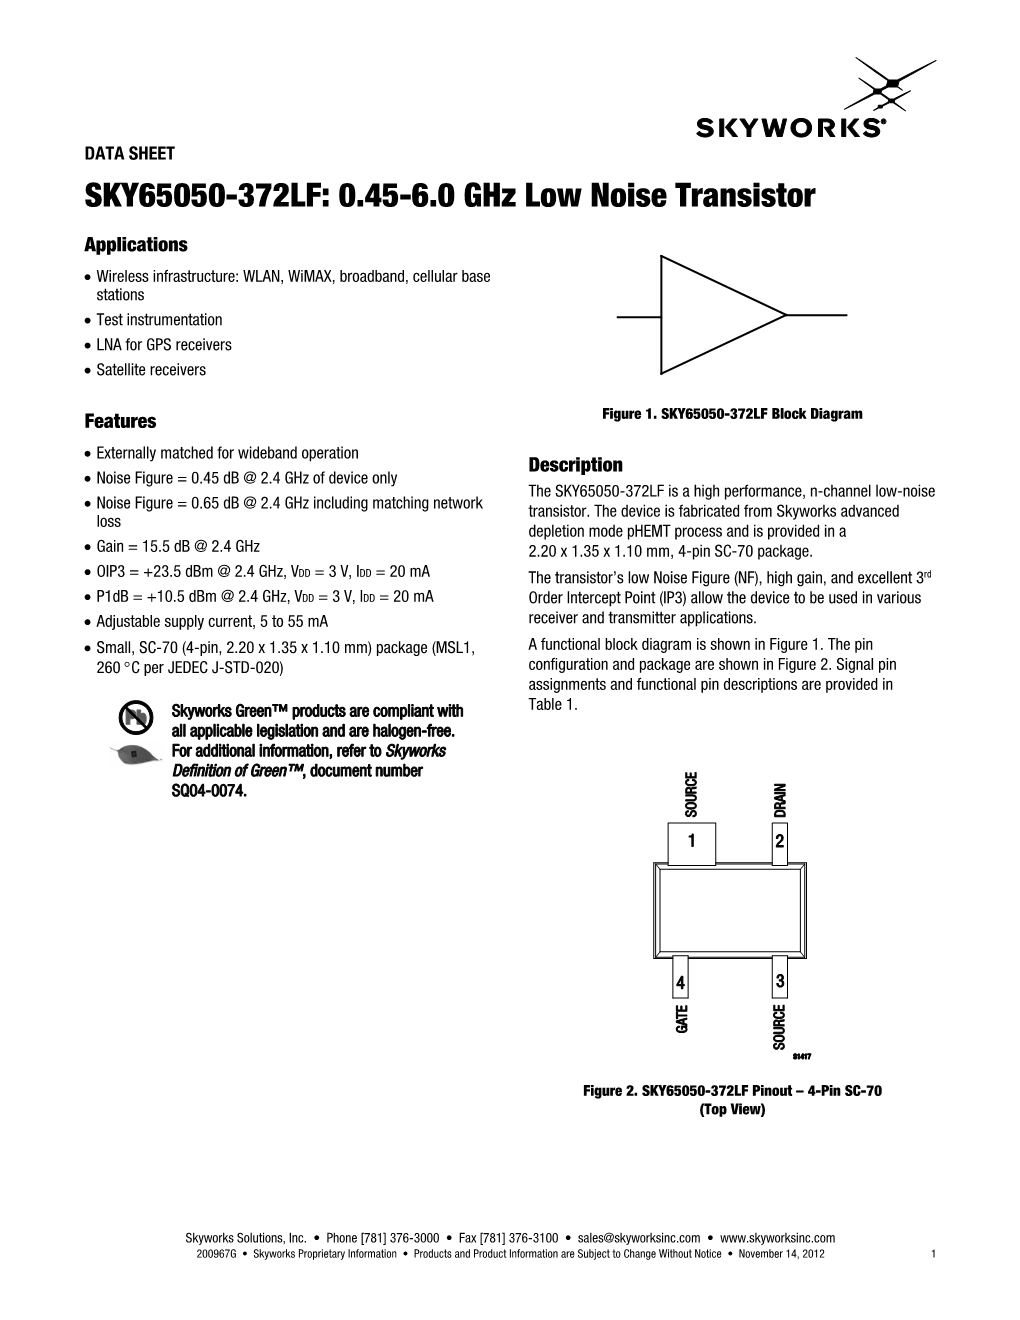 Data Sheets SKY65050-372LF: 0.45-6.0 Ghz Low Noise Transistor